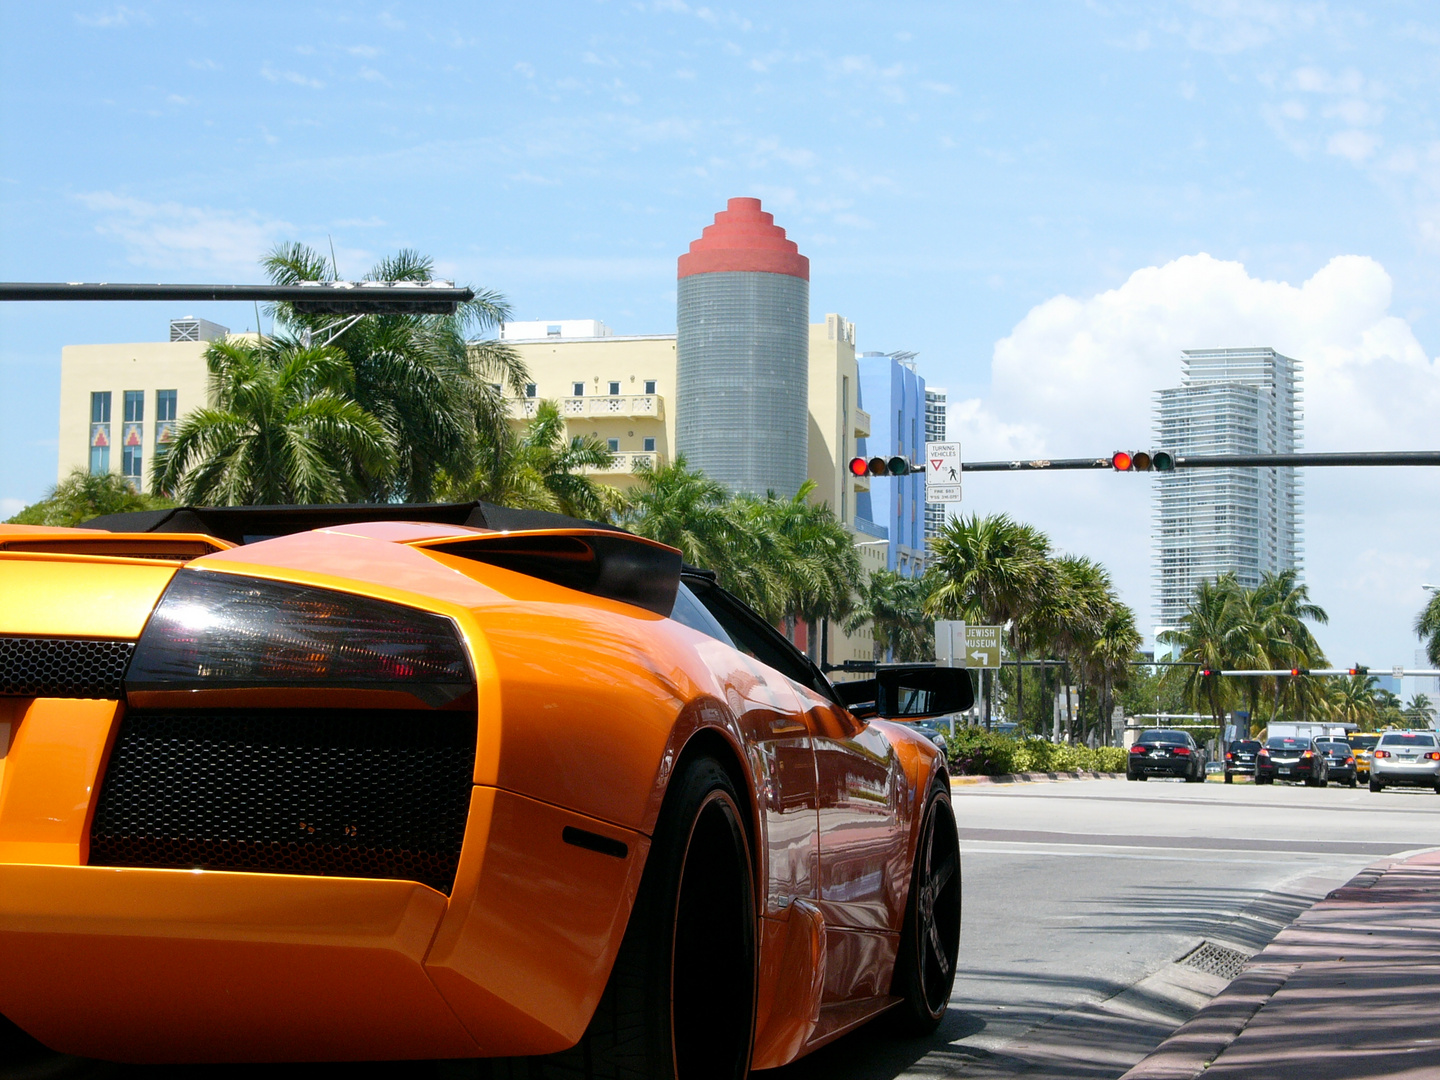 Lamborghini Orange in Miami South Beach USA (Leica Digilux 2)